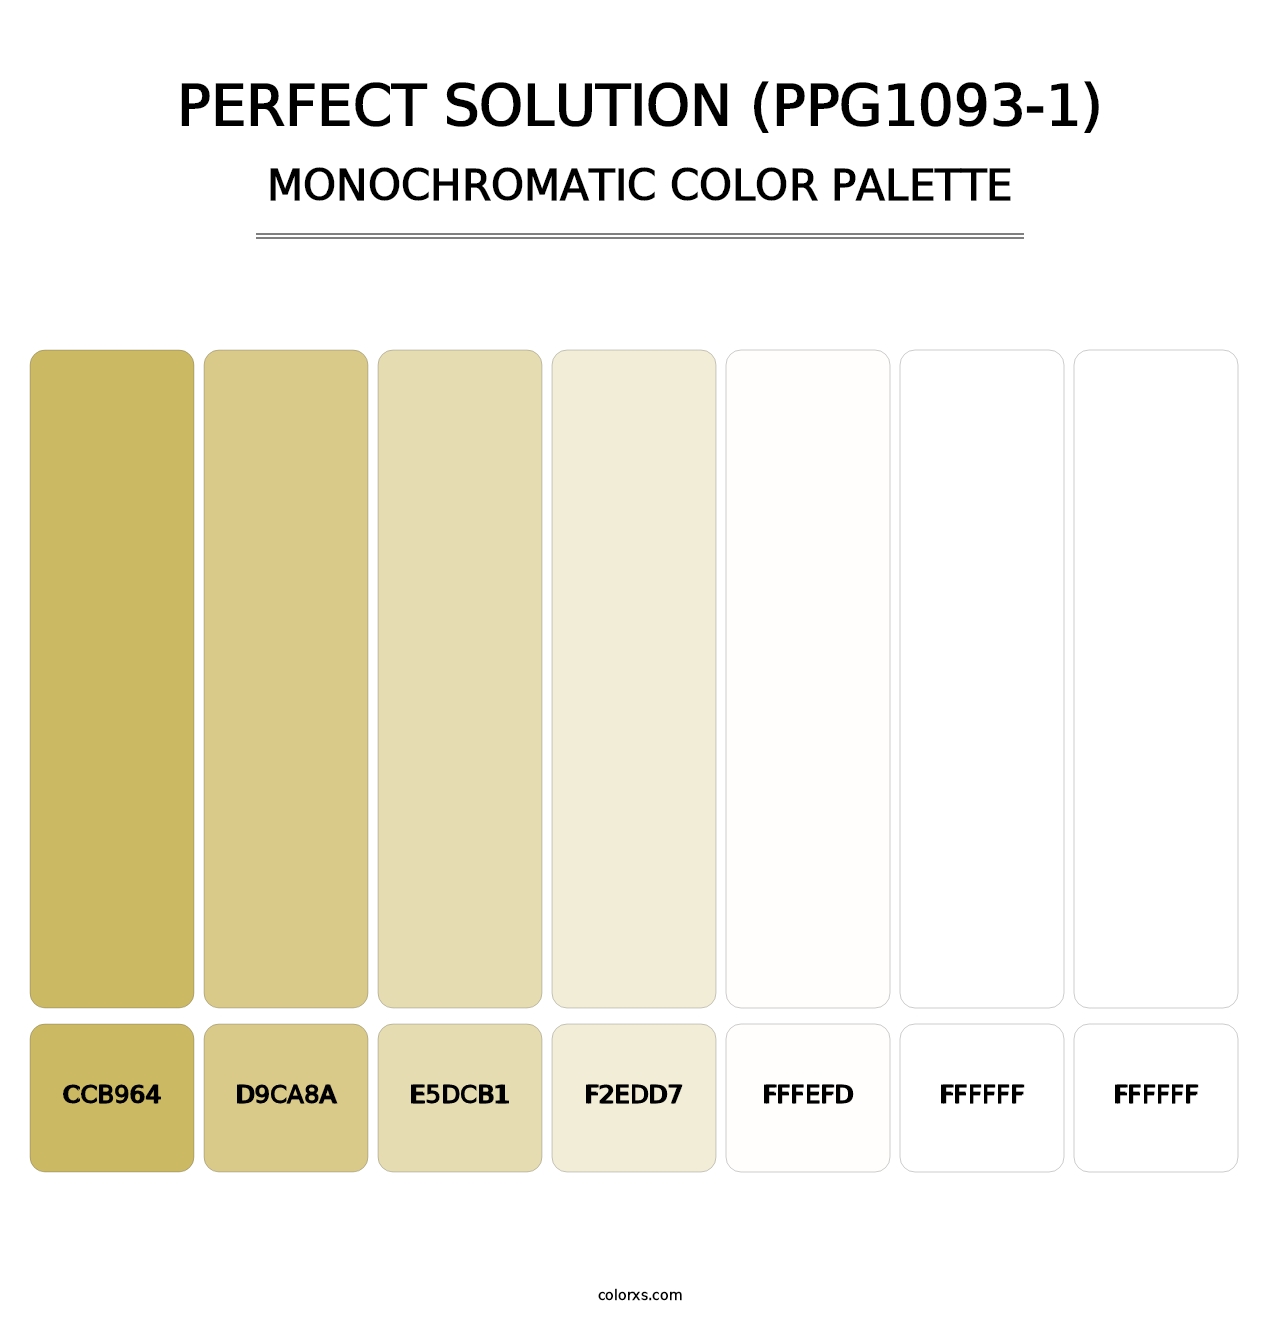 Perfect Solution (PPG1093-1) - Monochromatic Color Palette